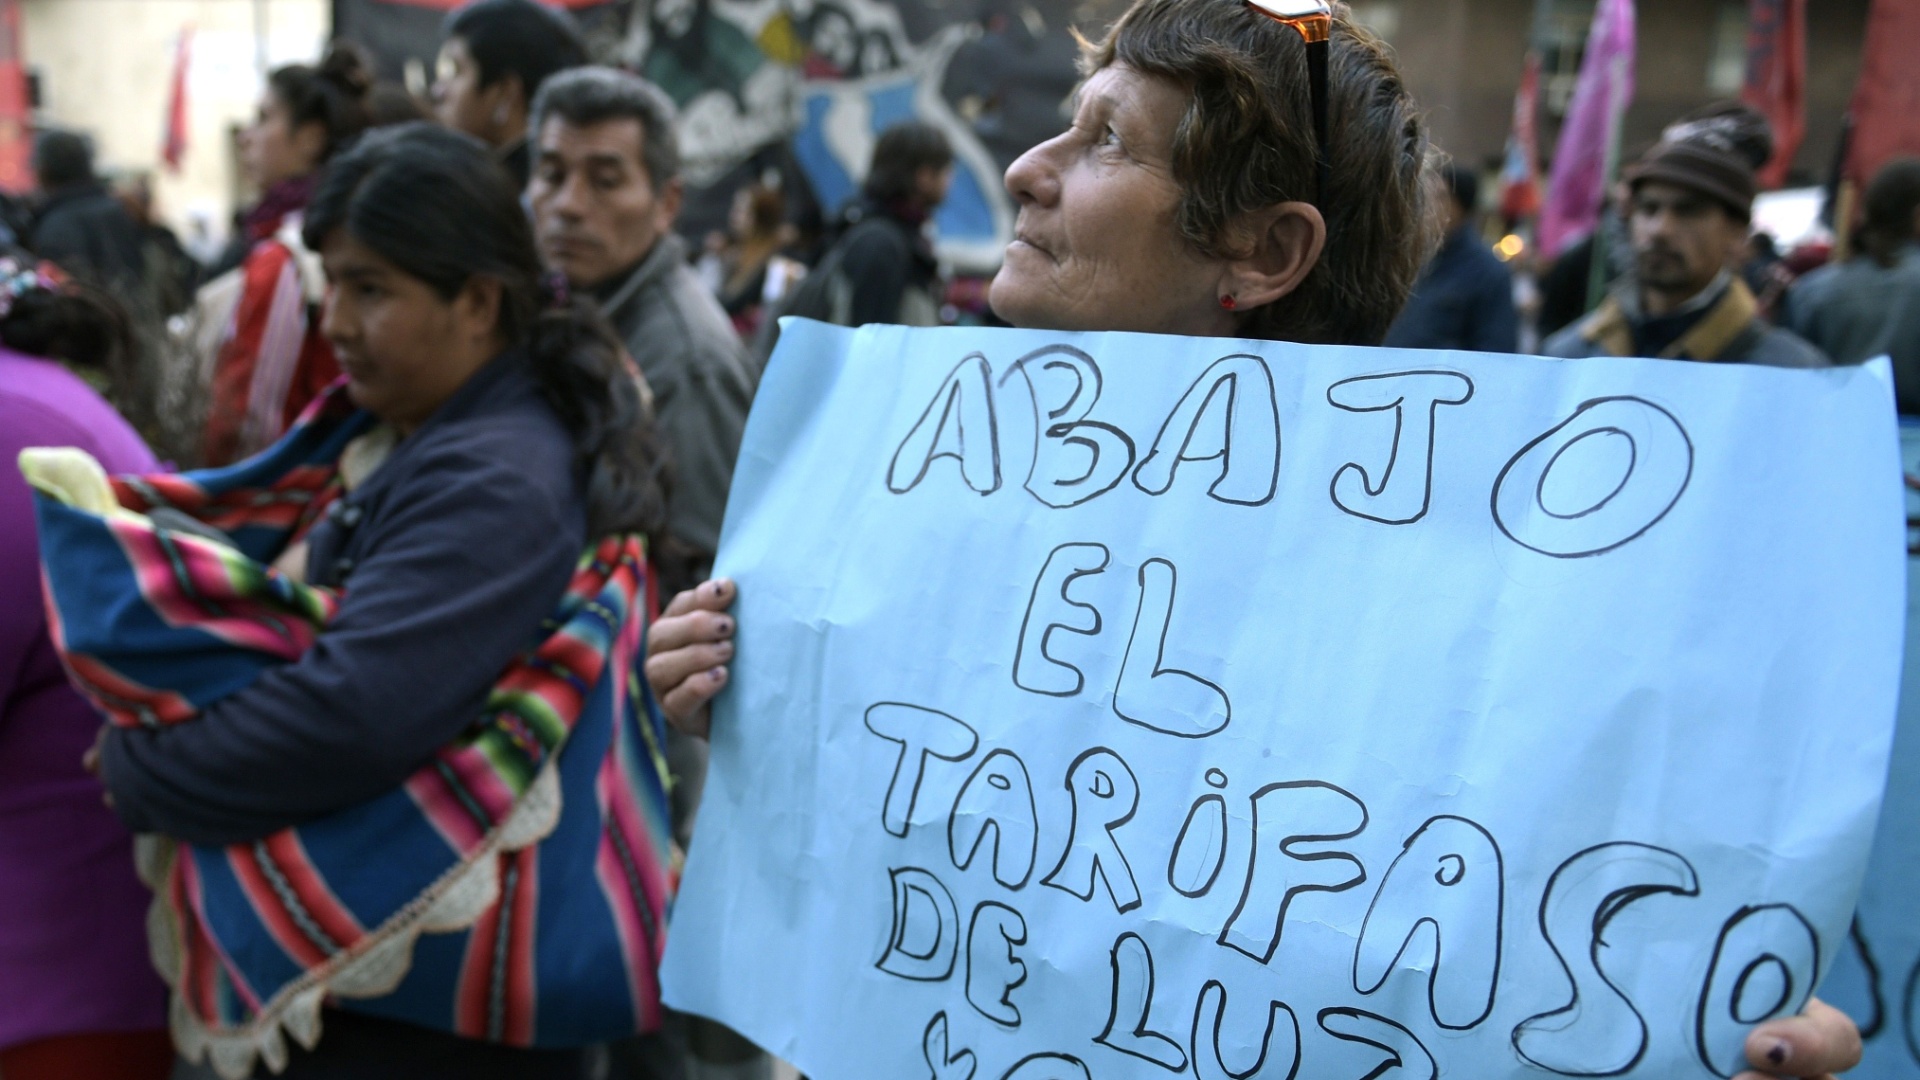 Juan Mabromata/AFP